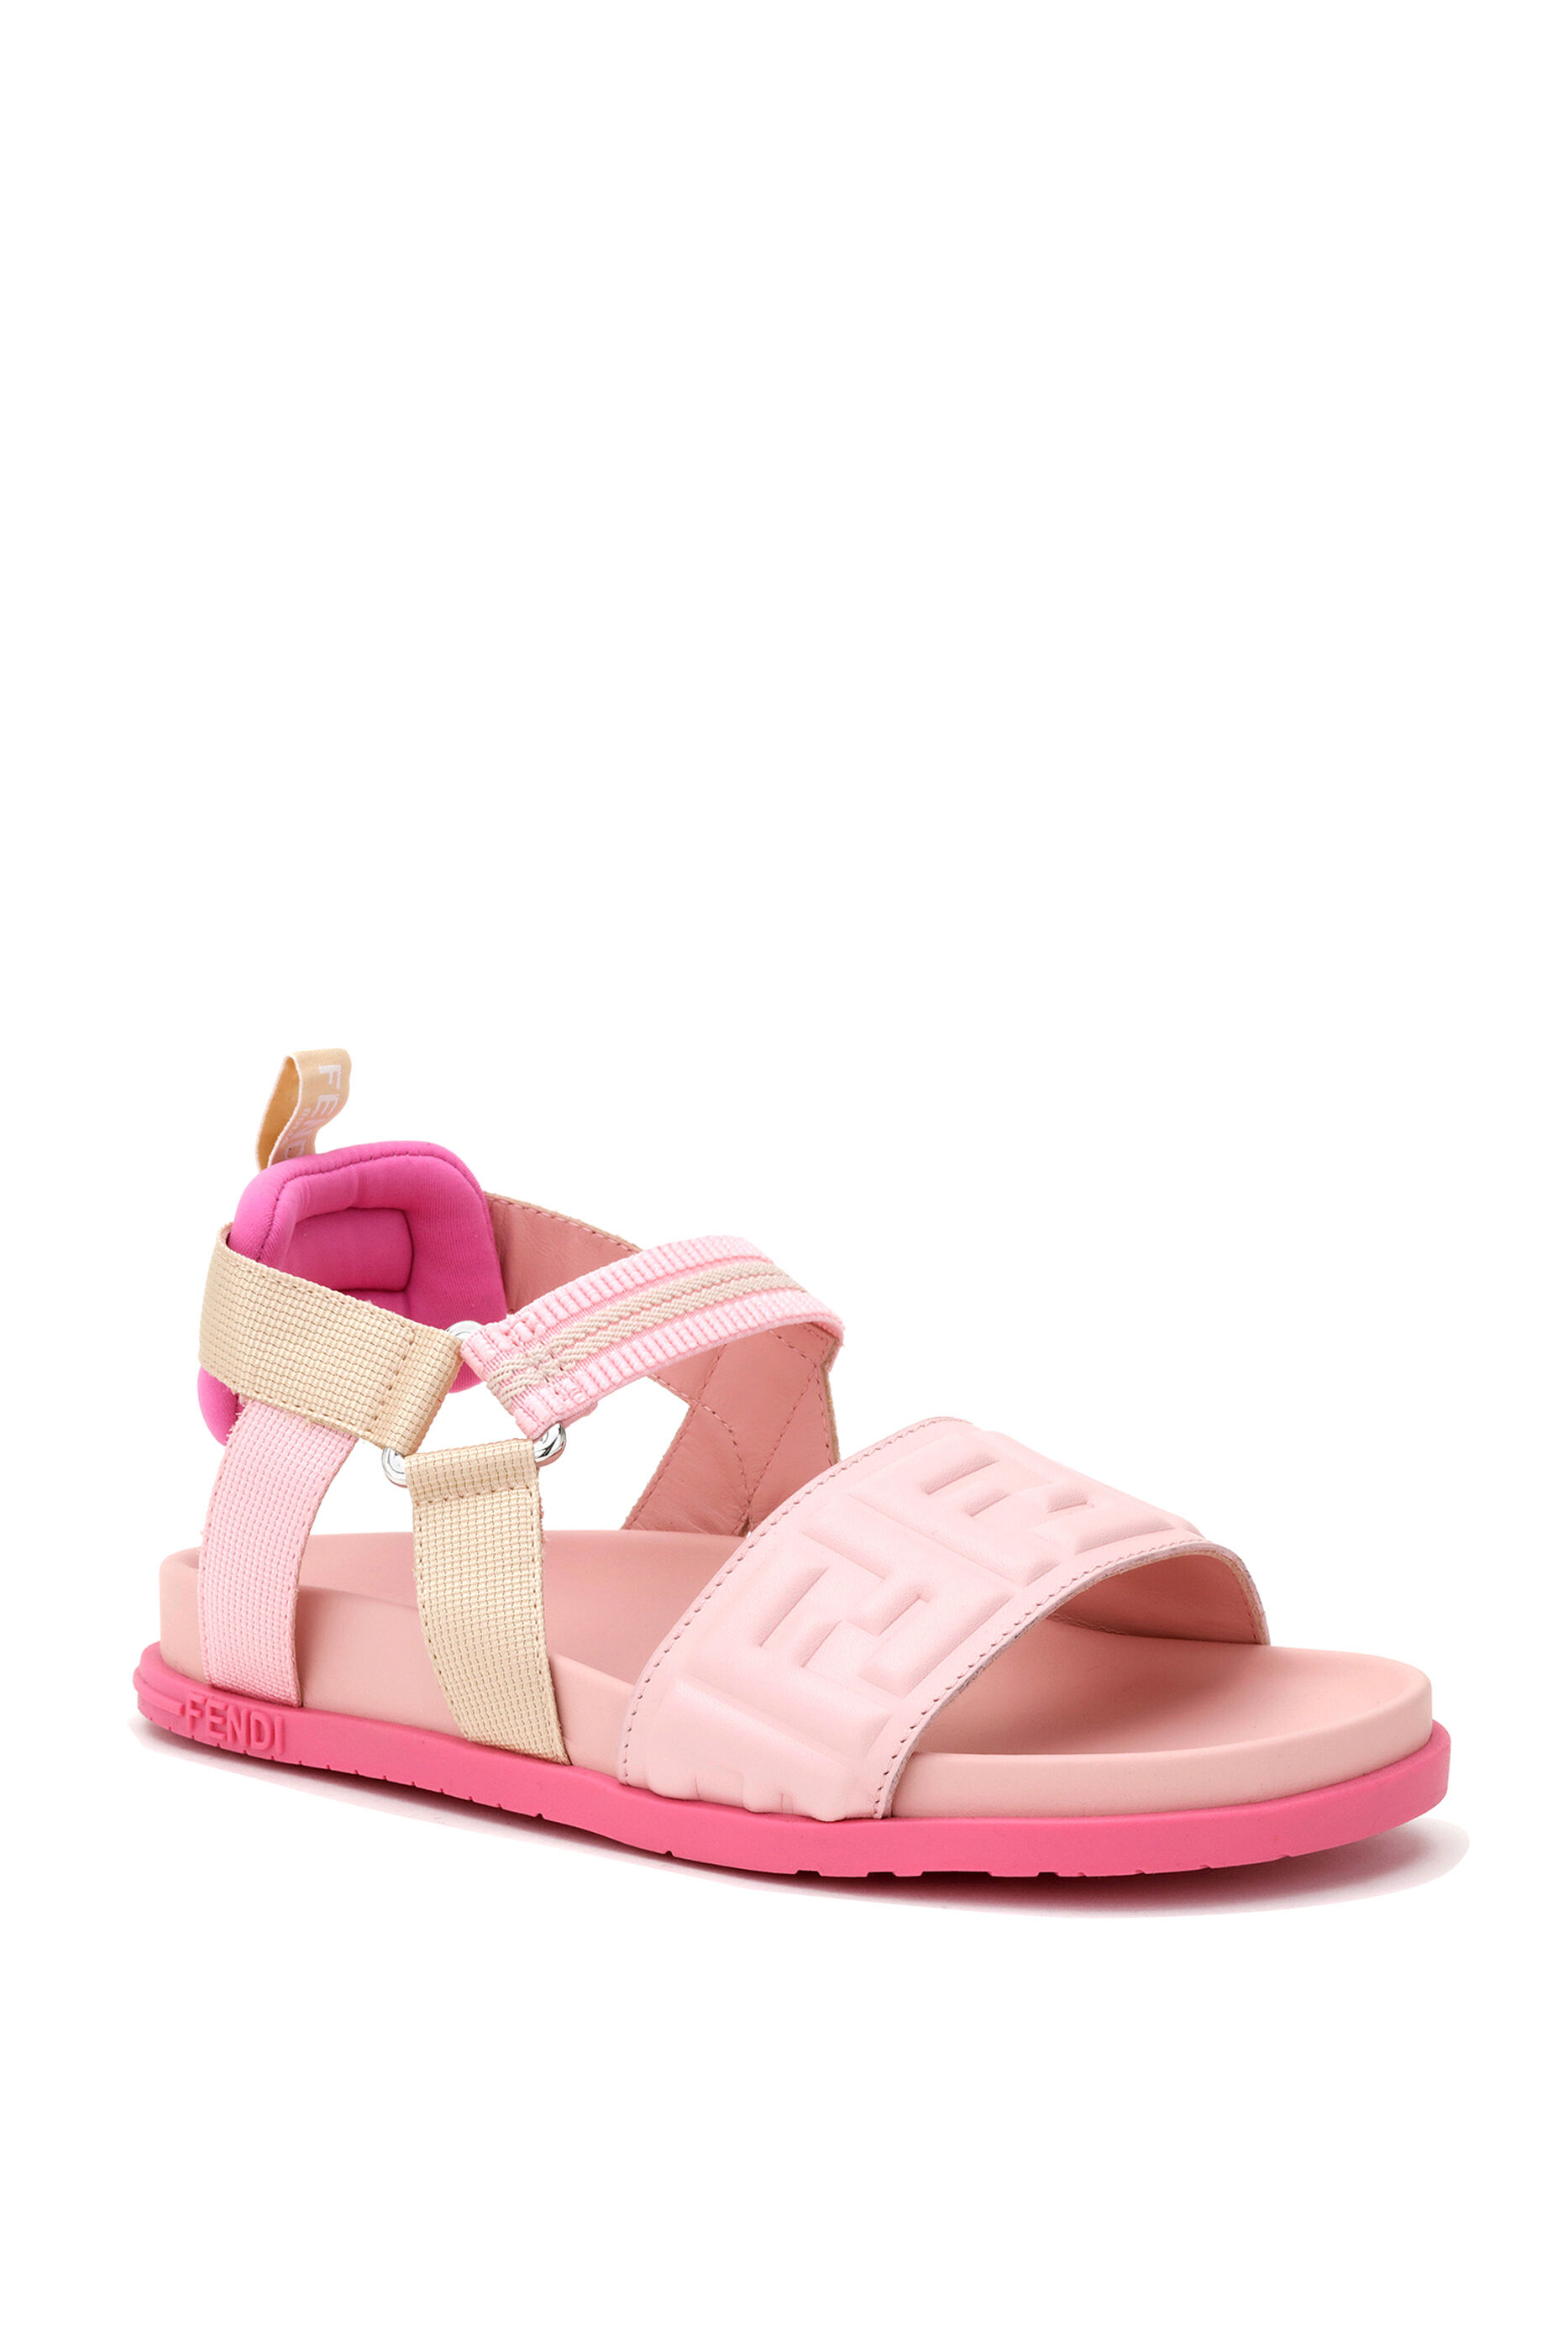 Lunar Kids Fiji Junior Pink Girl's Sandals Size UK 12/13 EU 31/32 